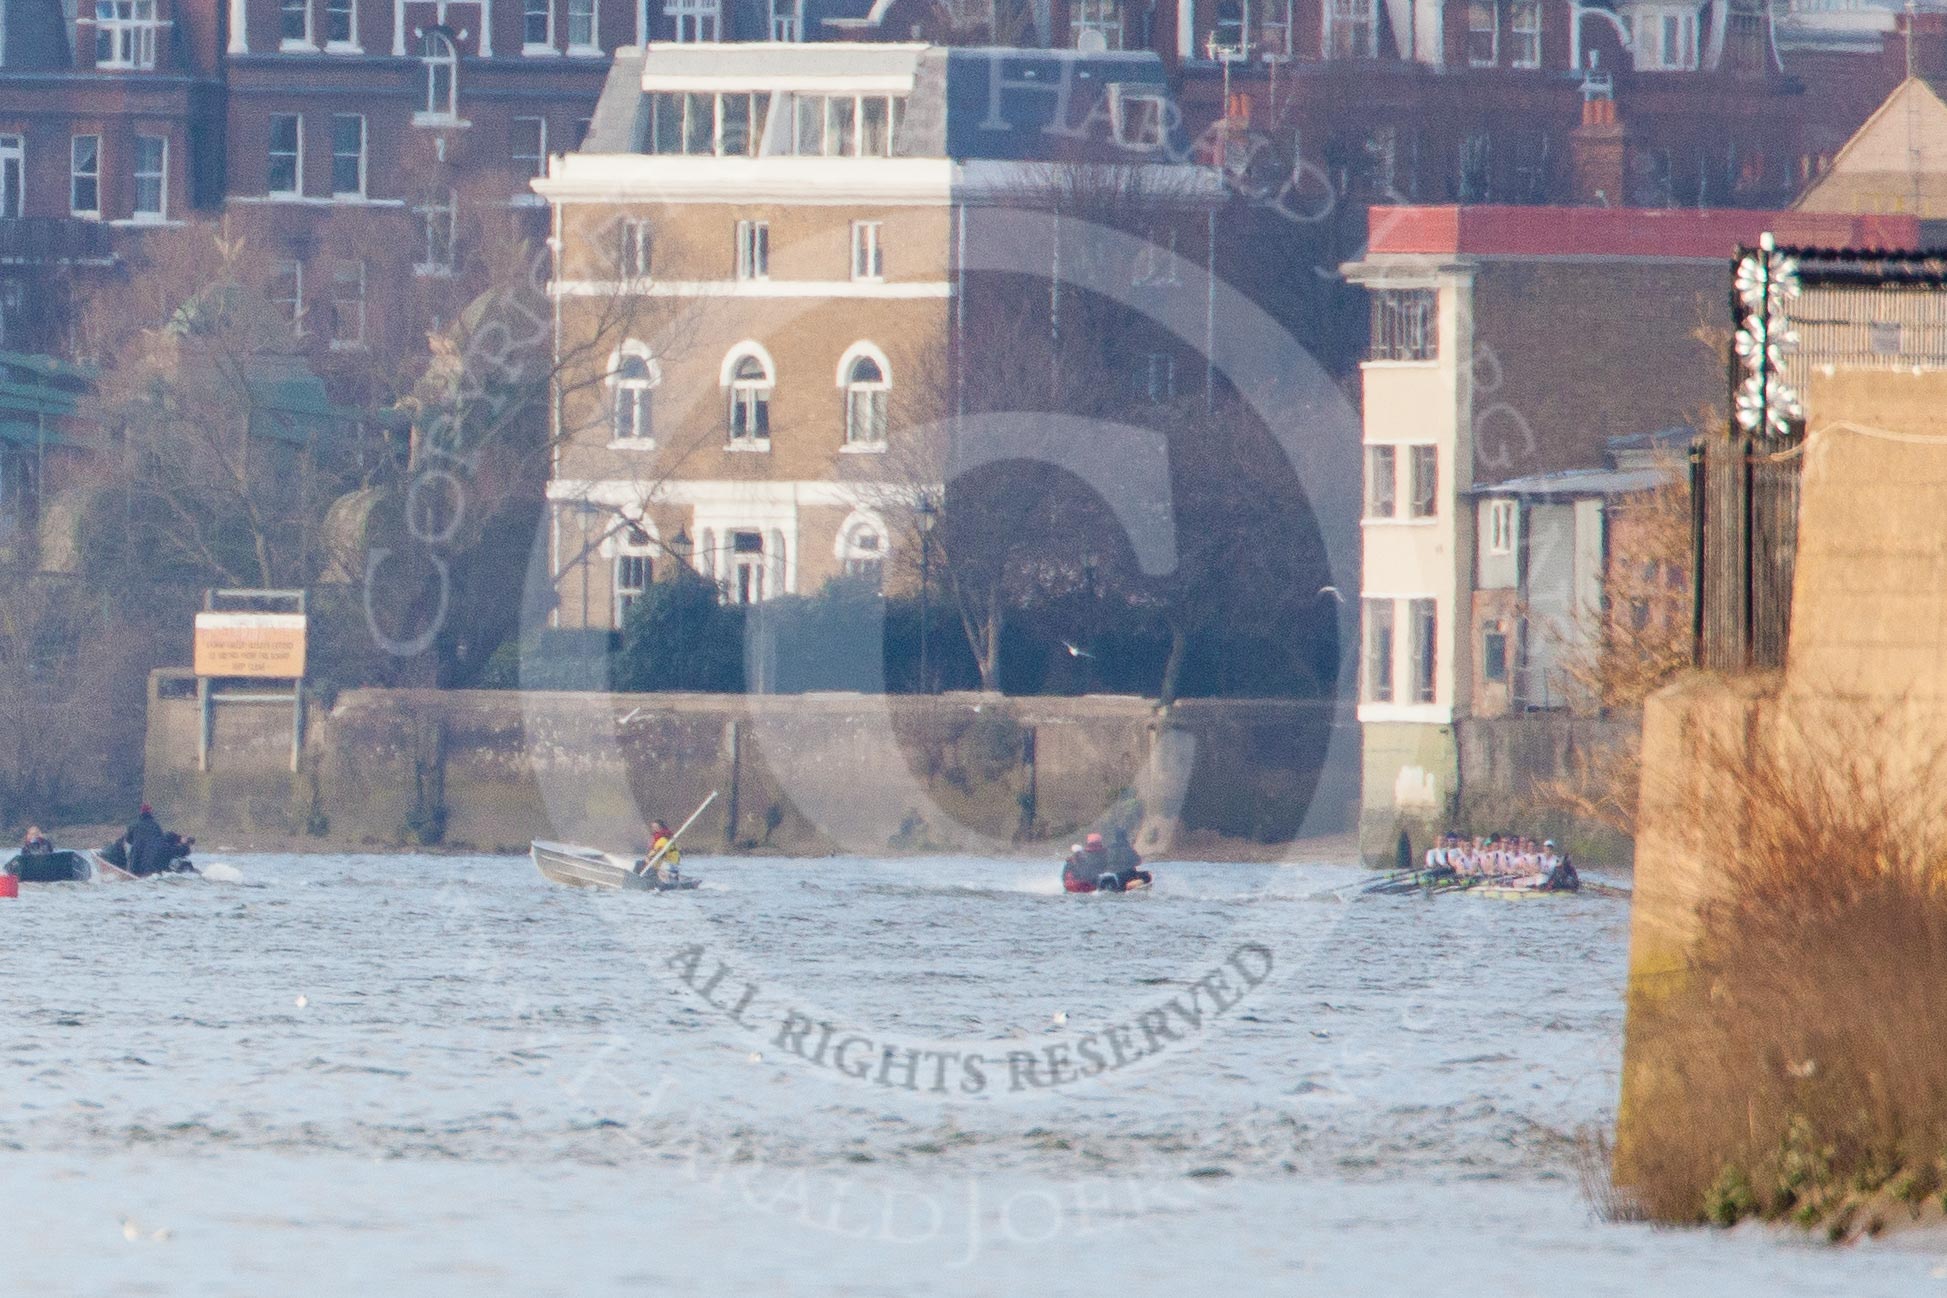 The Boat Race season 2013 - fixture CUBC vs Leander.
River Thames Tideway between Putney Bridge and Mortlake,
London SW15,

United Kingdom,
on 02 March 2013 at 16:02, image #186